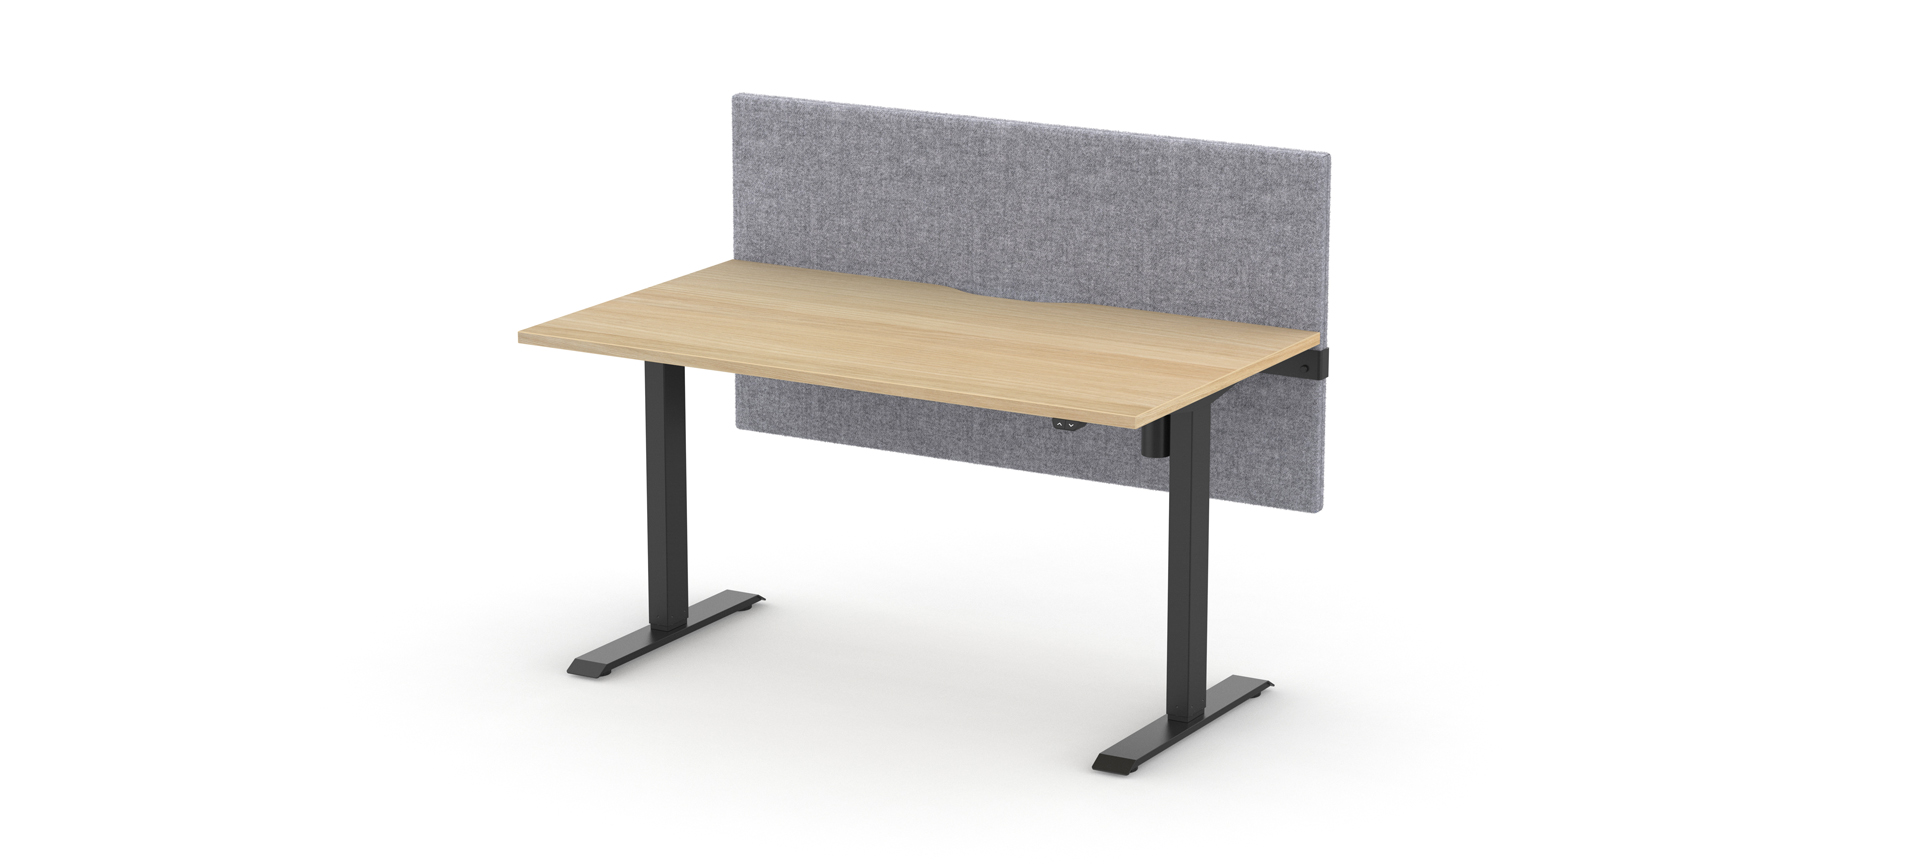 Formetiq Alto 1 sit-stand height adjustable desk